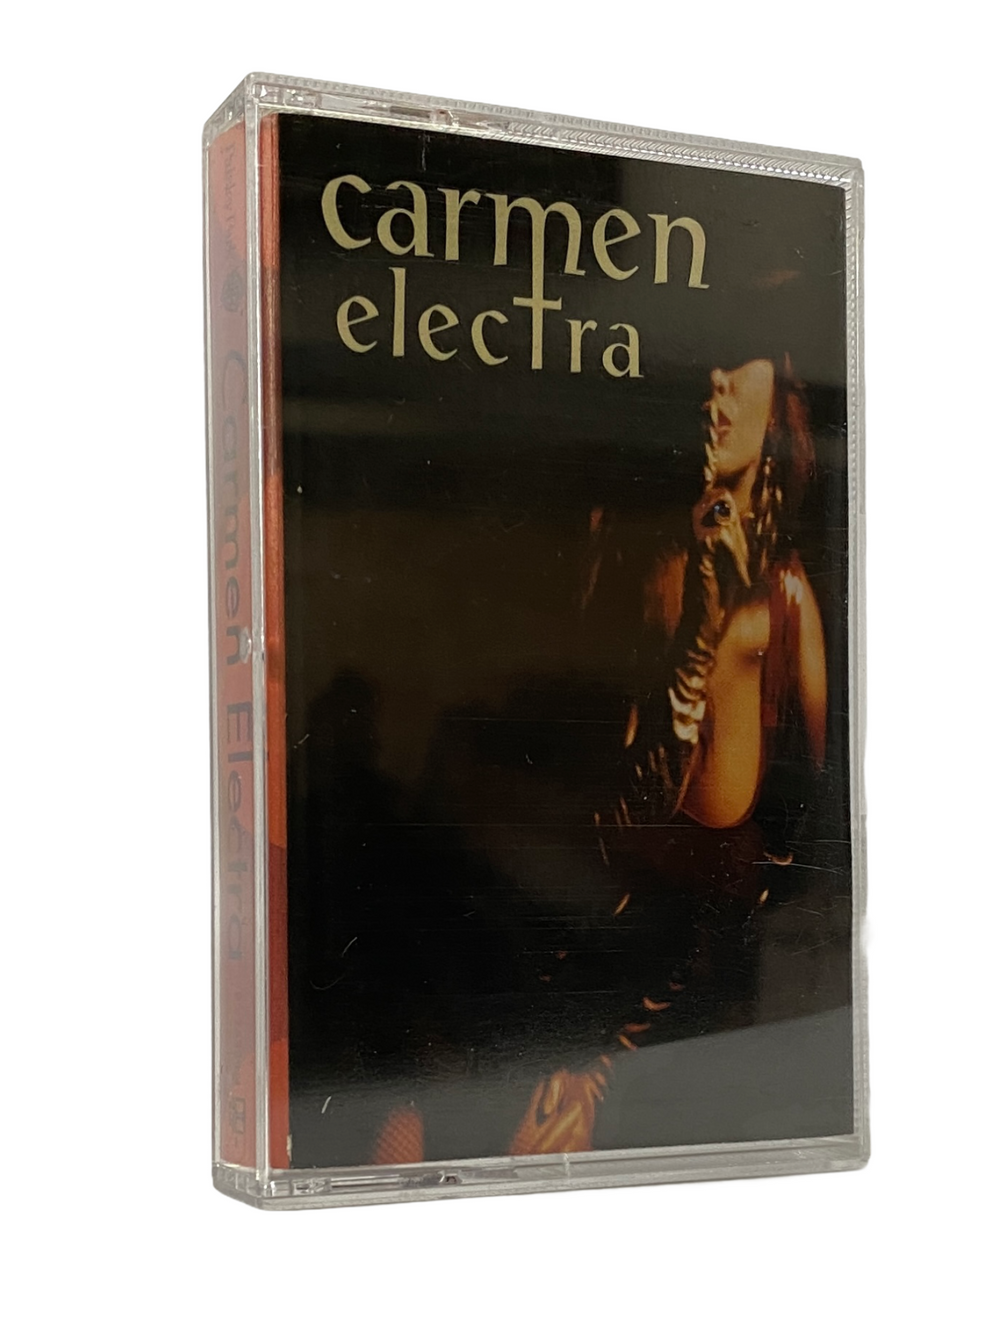 Prince – Carmen Electra Self Titled Original Cassette Tape USA 1992 Release Prince